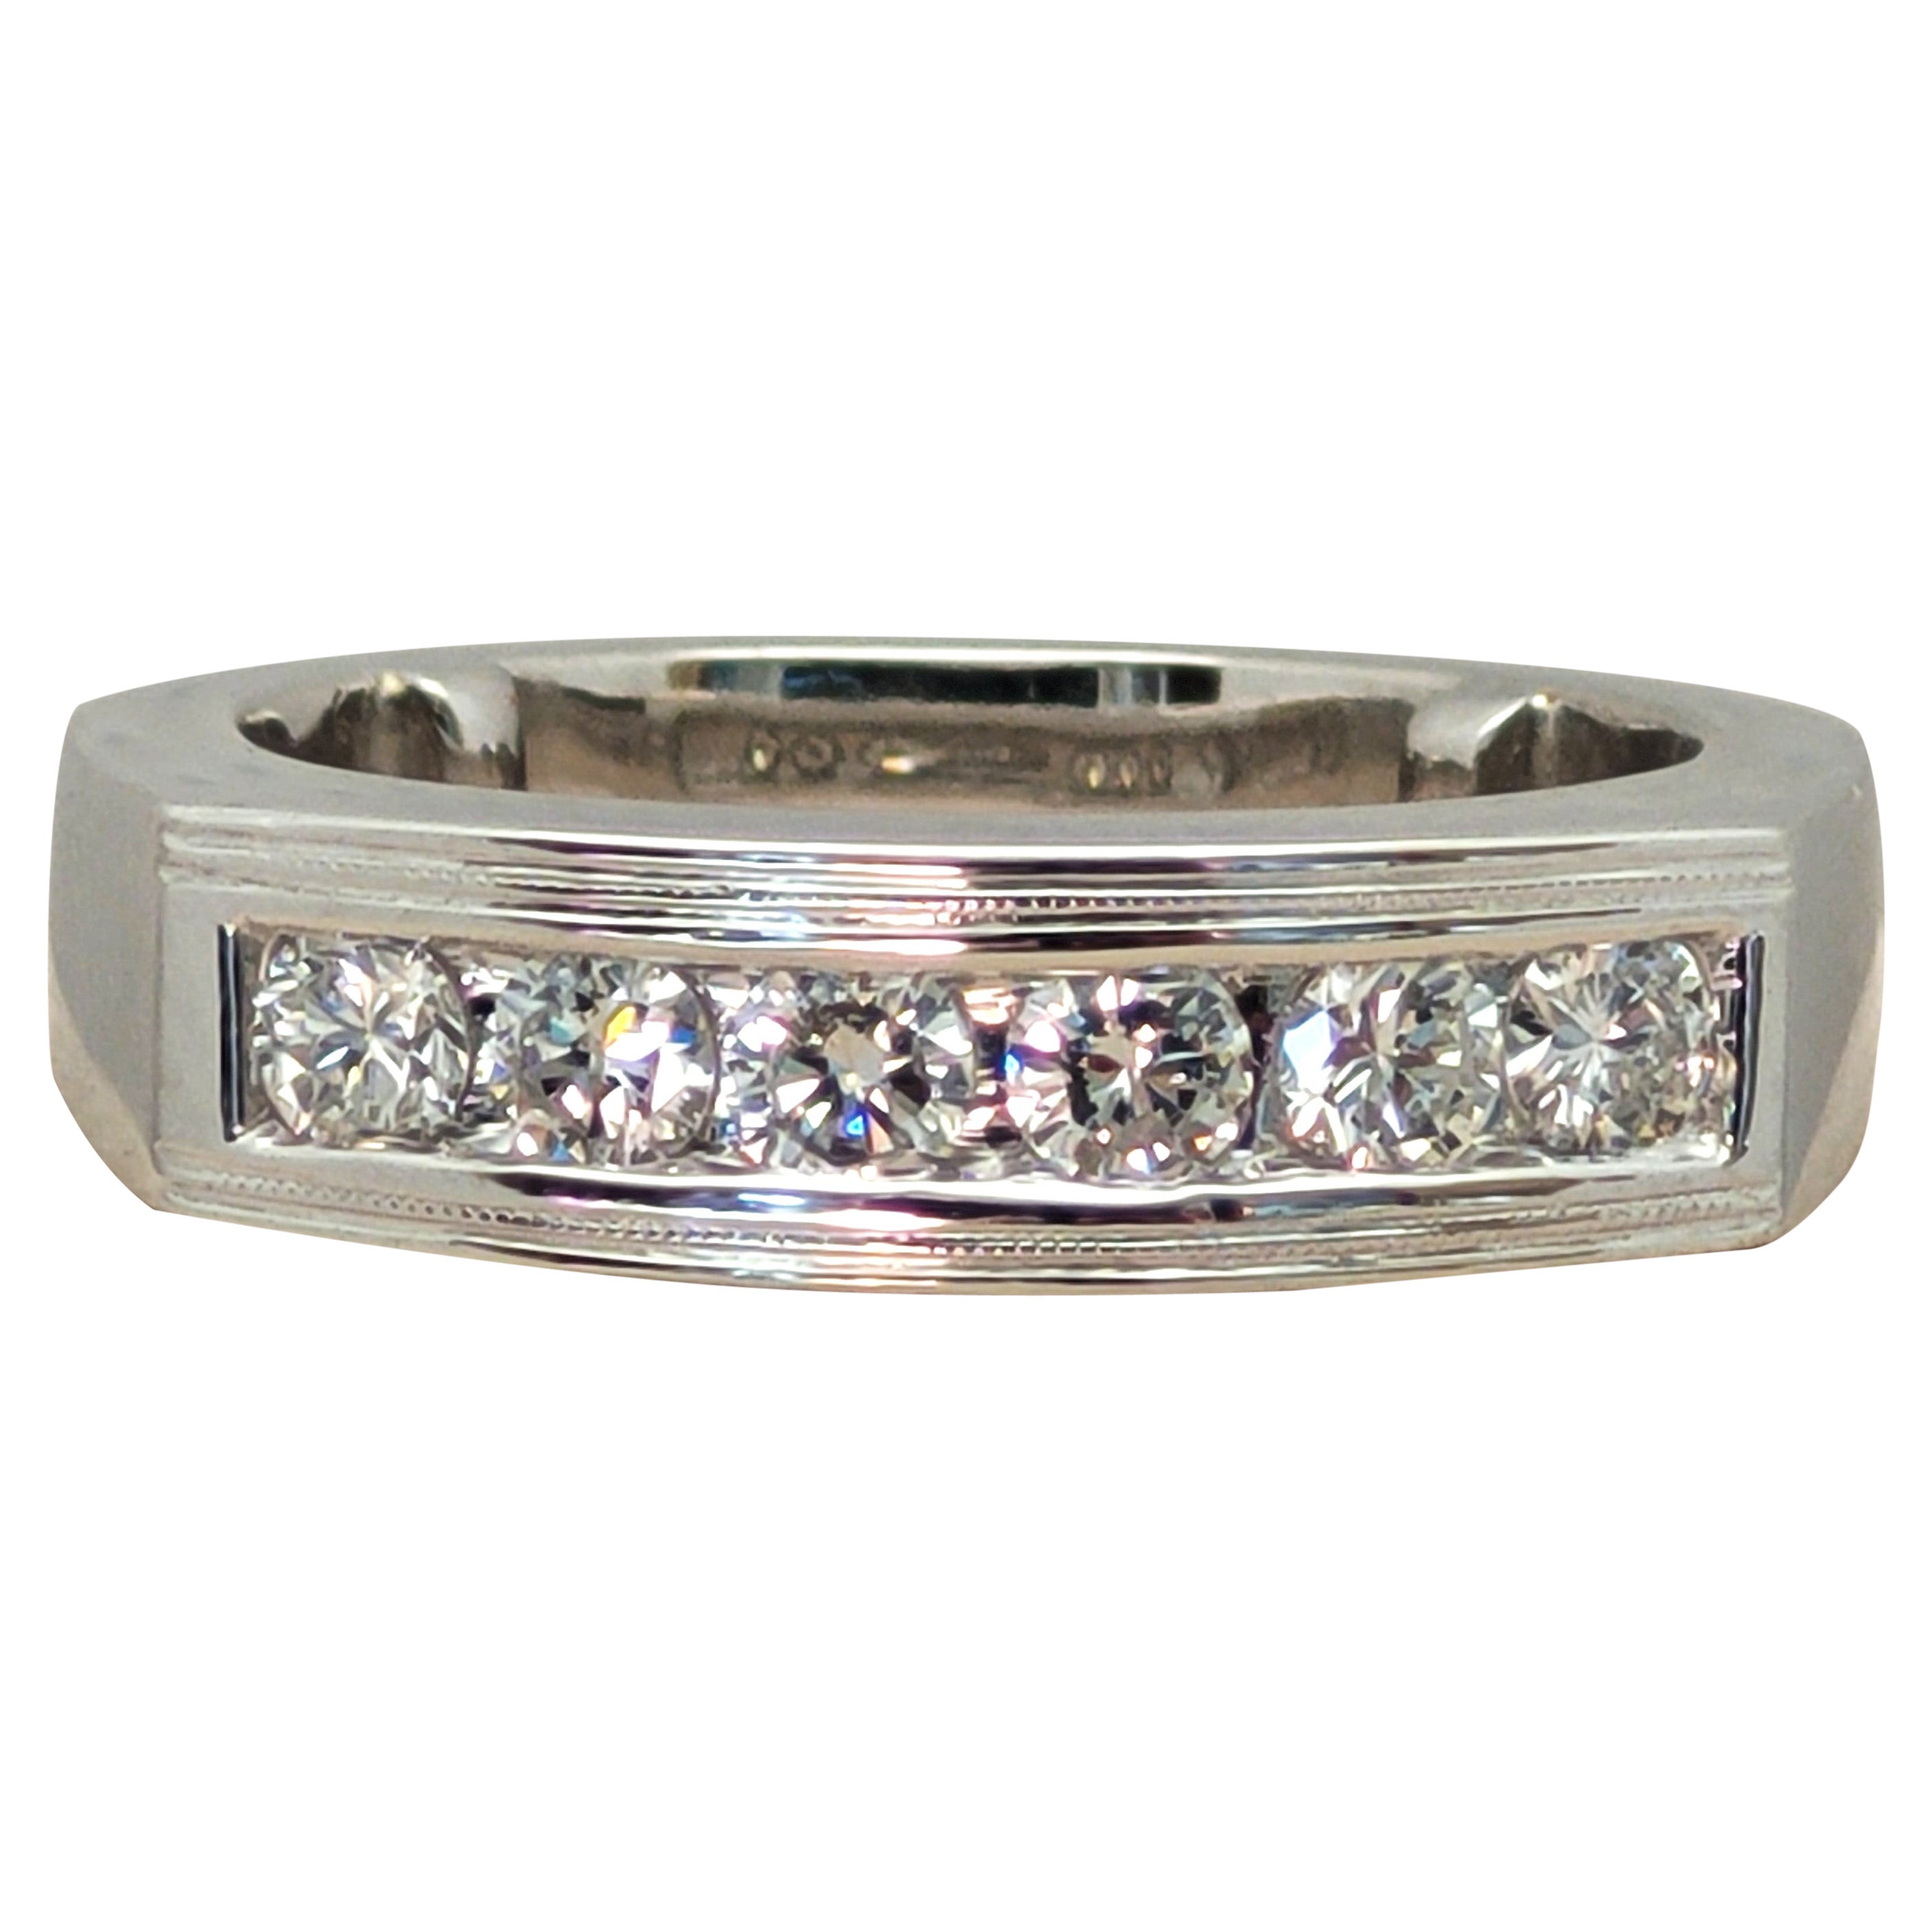 Platinum Round Brilliant Diamond Ring by Designer RGC, like New, .48cttw